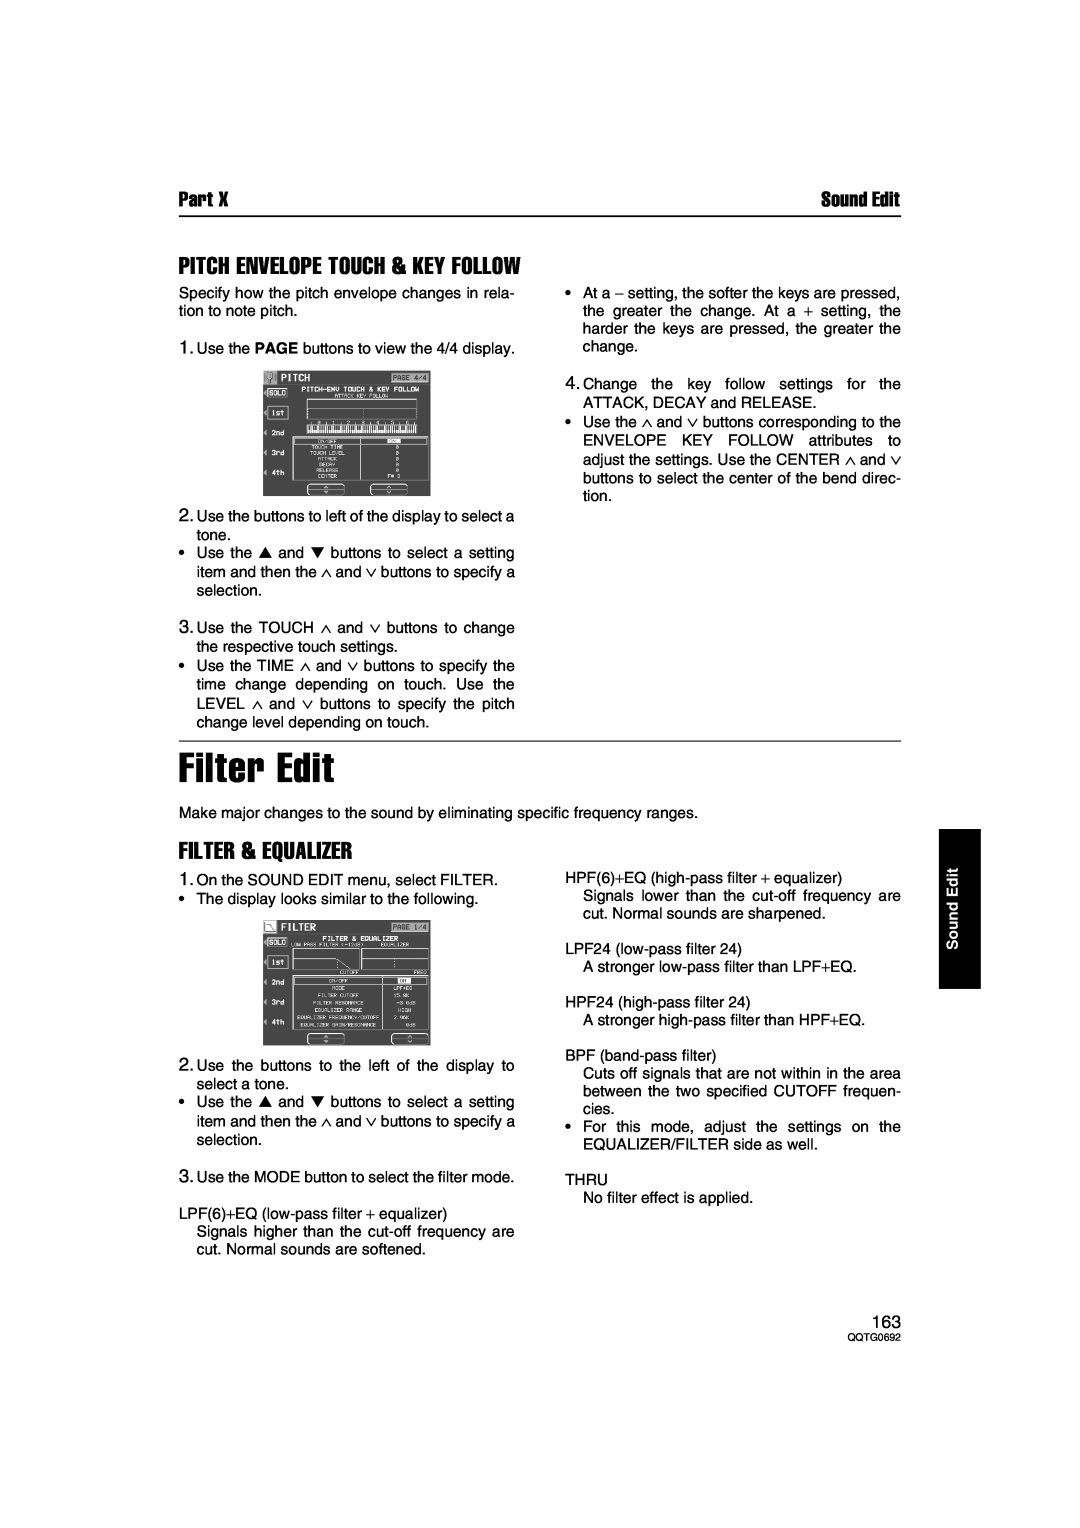 Panasonic SX-KN2400, SX-KN2600 manual Filter Edit, Filter & Equalizer, Pitch Envelope Touch & Key Follow, Part, Sound Edit 